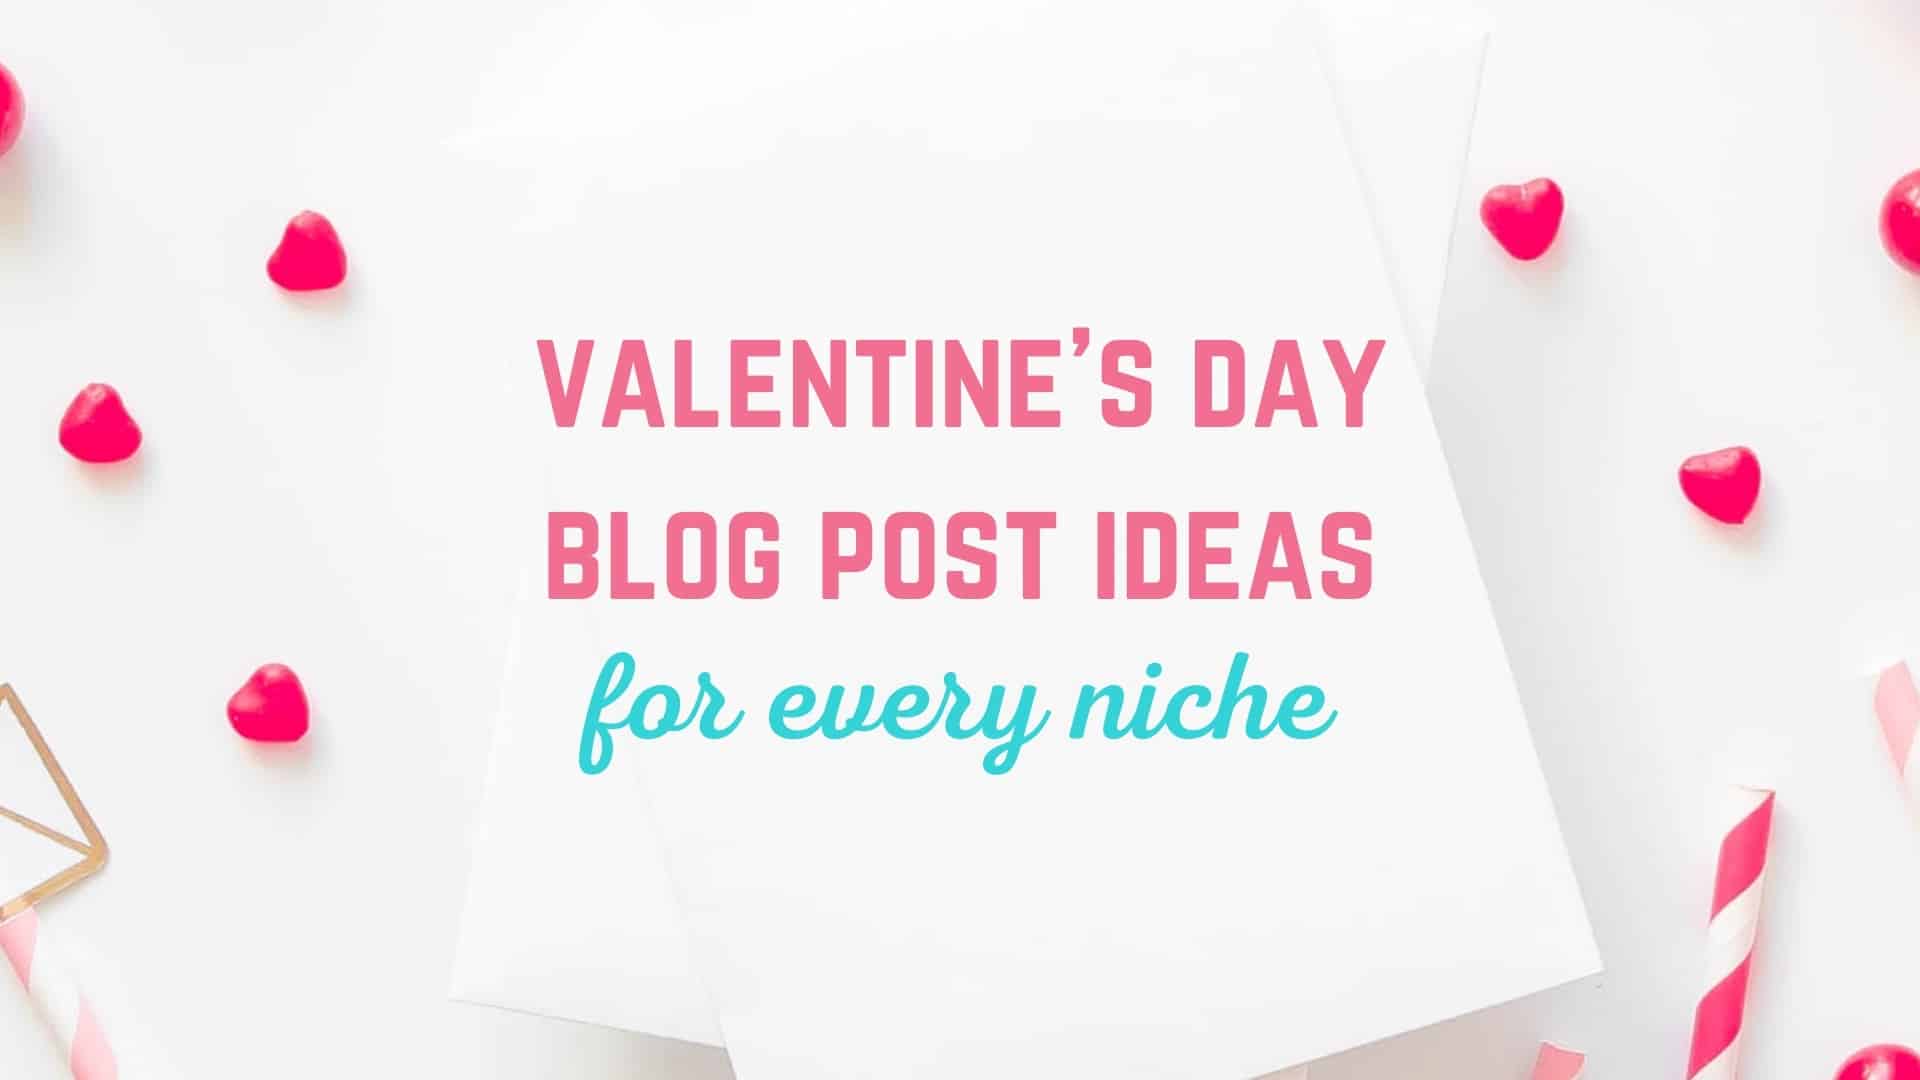 100 Valentine’s Day Blog Post Ideas for Your Niche